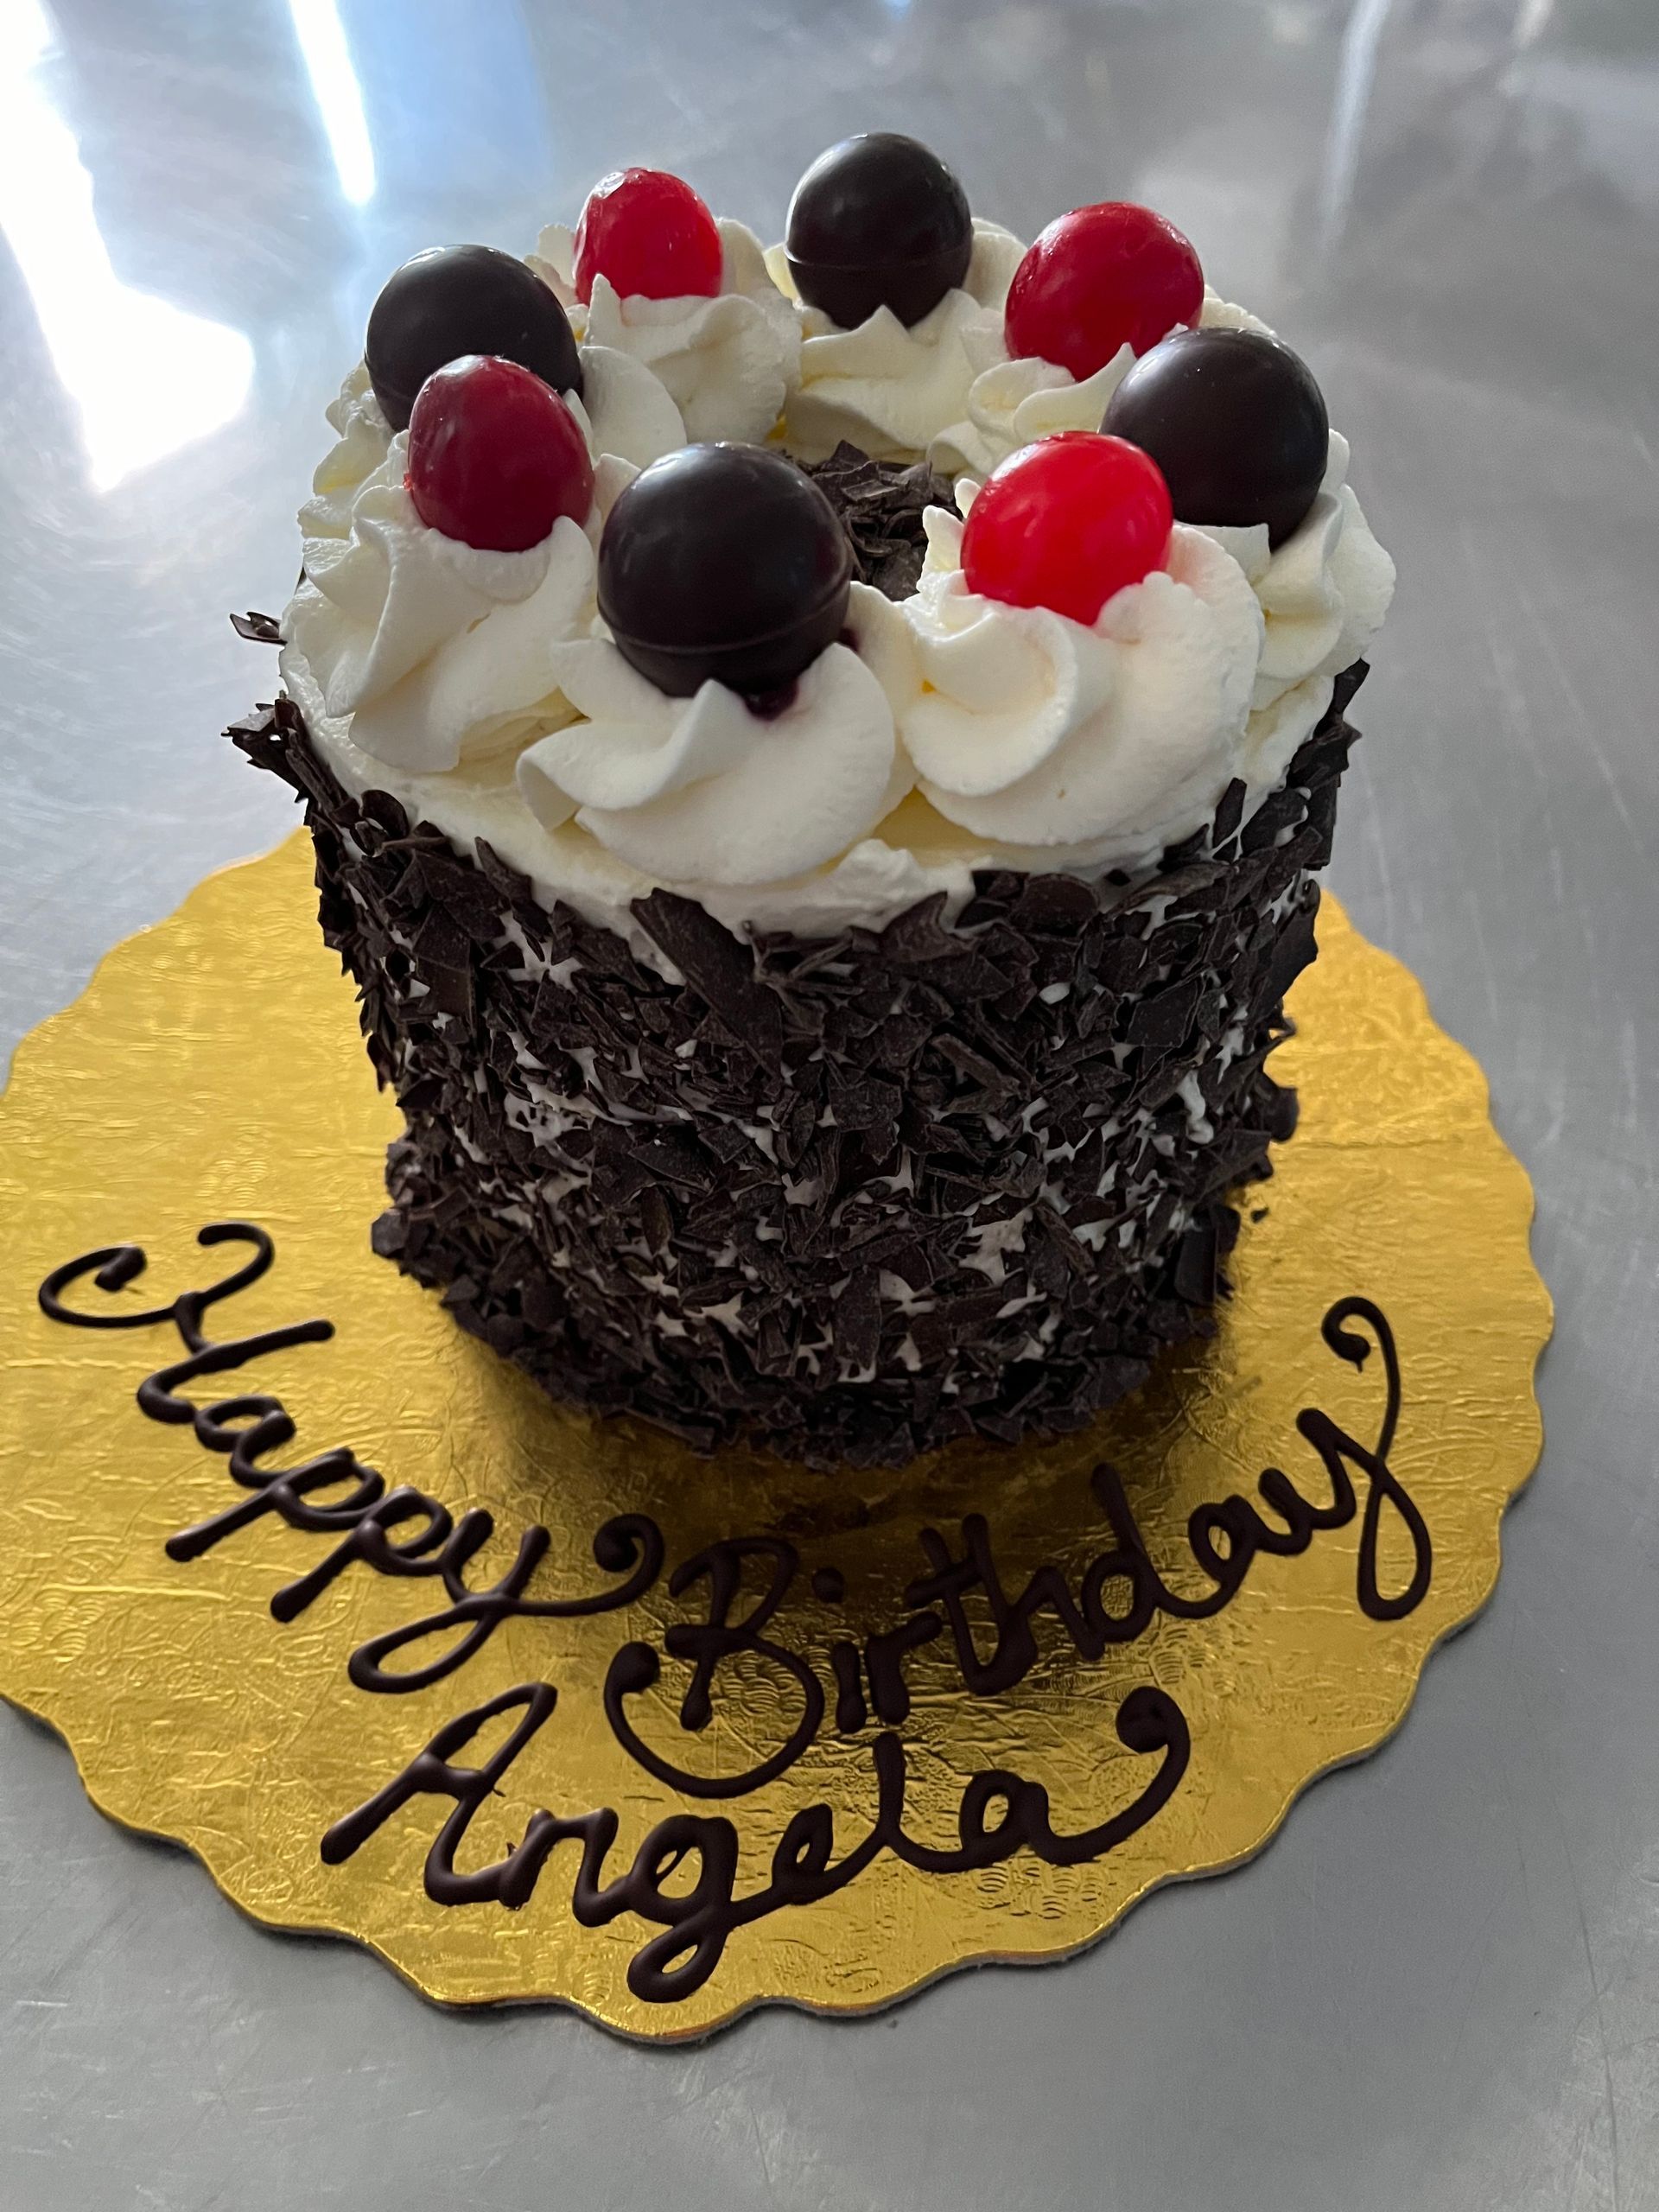 A birthday cake with cherries and whipped cream says happy birthday angela